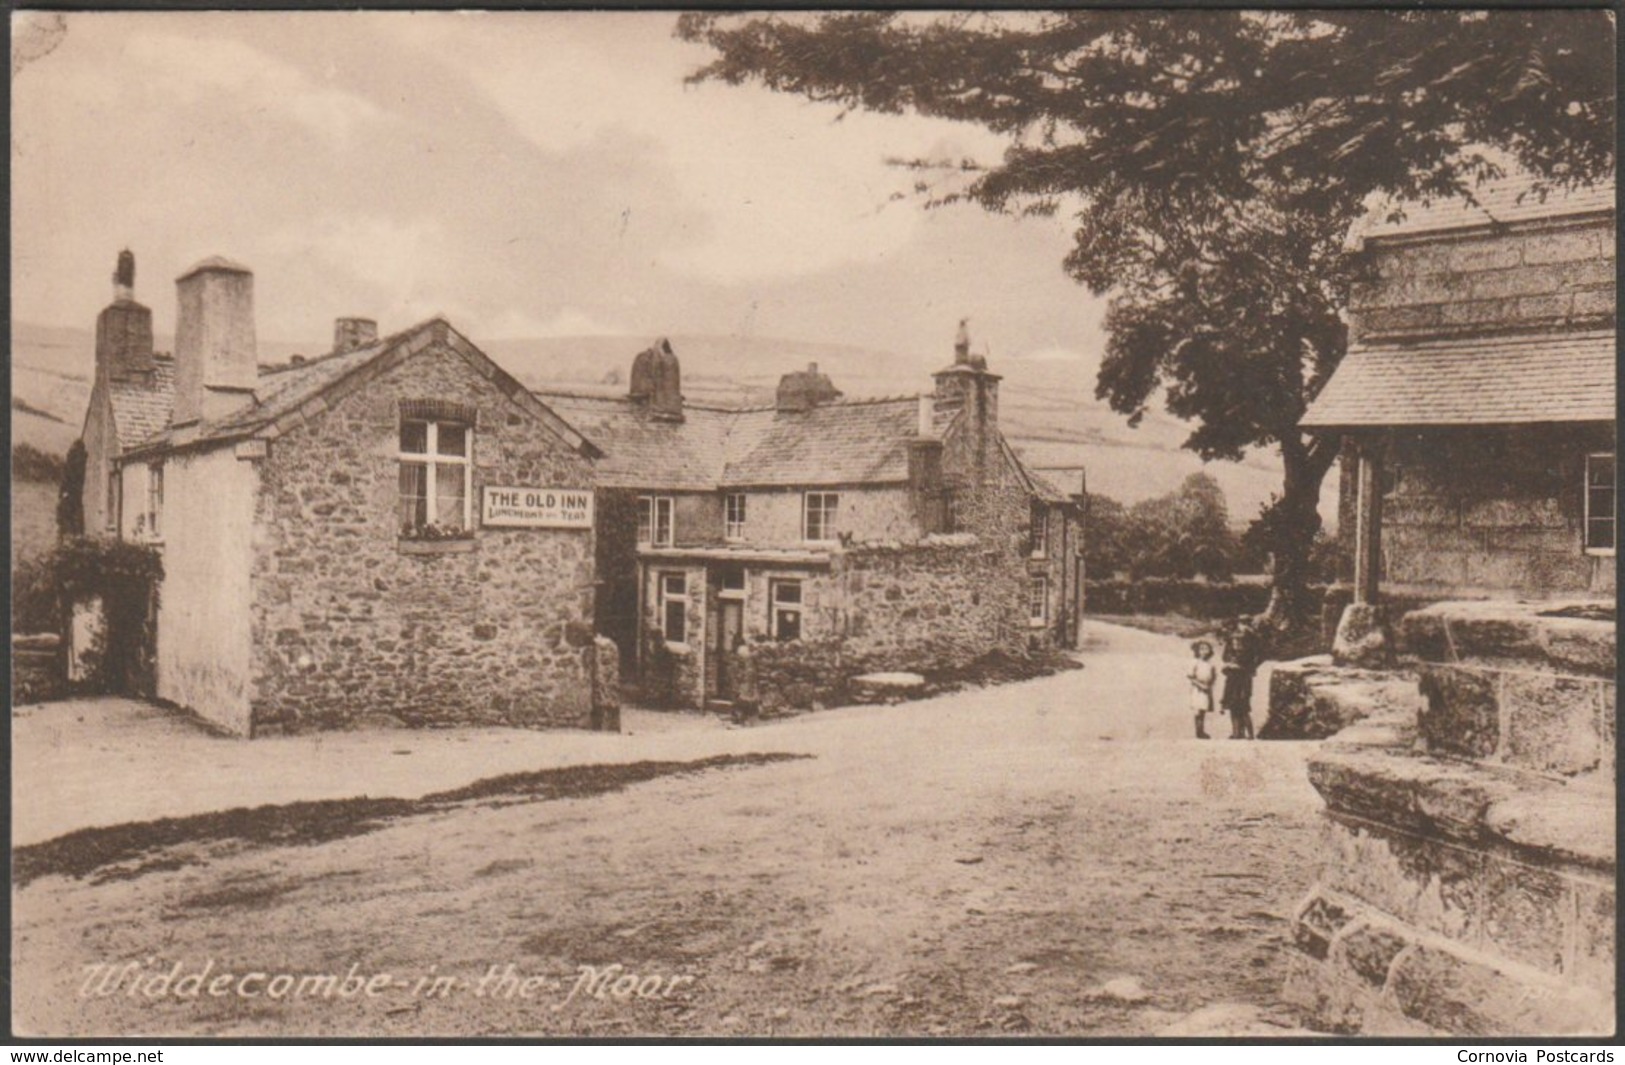 The Old Inn, Widdecombe In The Moor, Devon, C.1920s - Frith's Postcard - Dartmoor